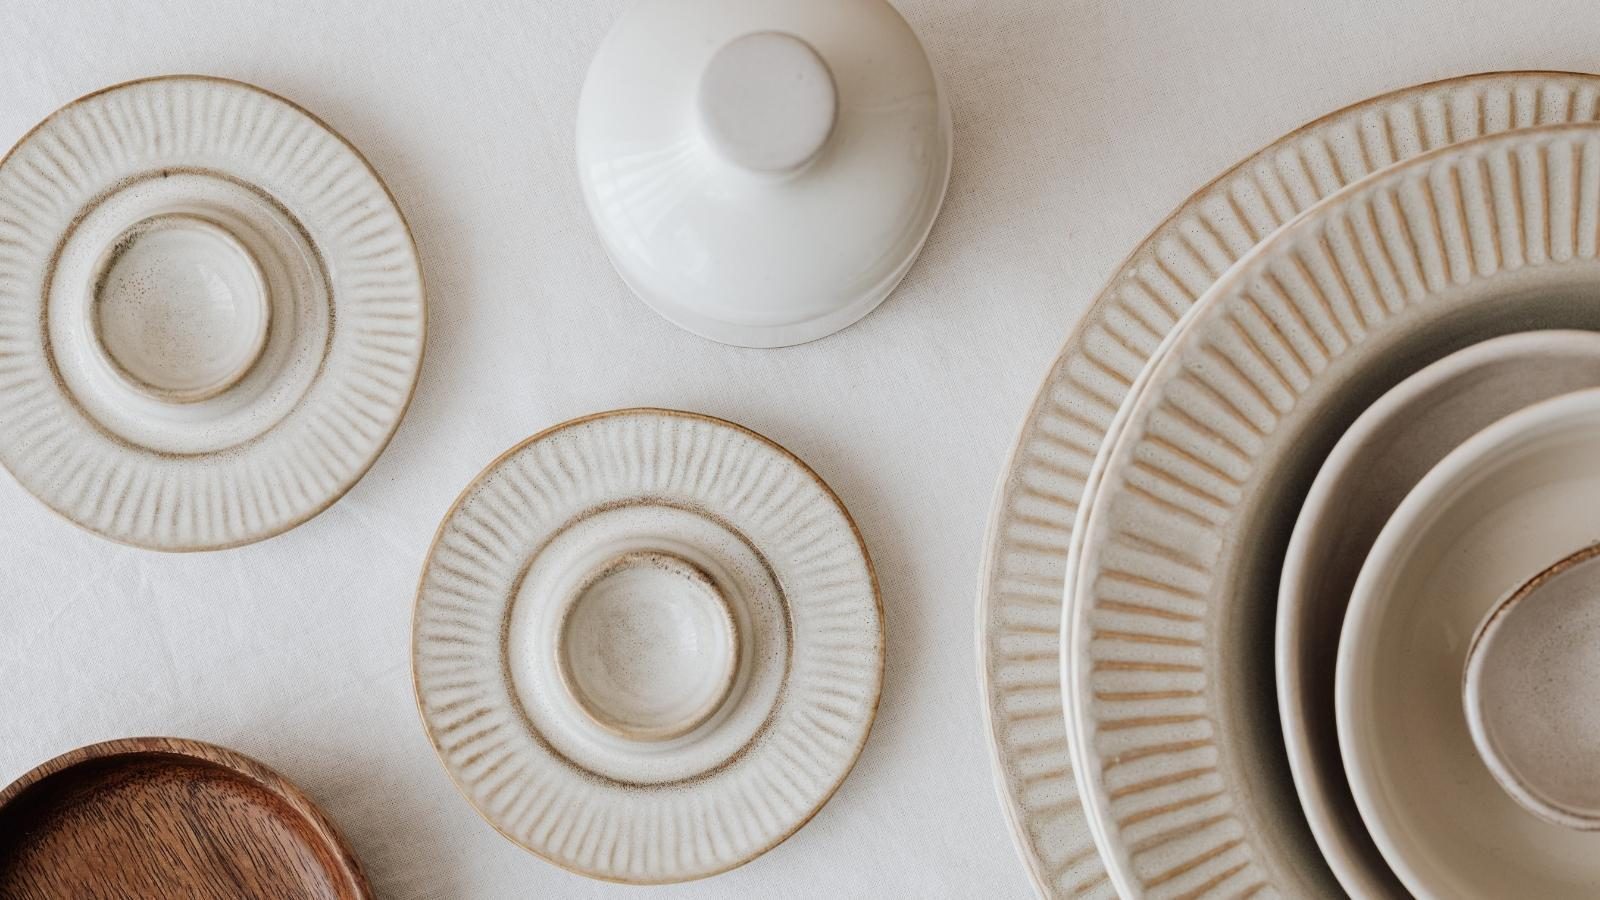 The ceramic plates - Comprendre vos rêves - Kaya